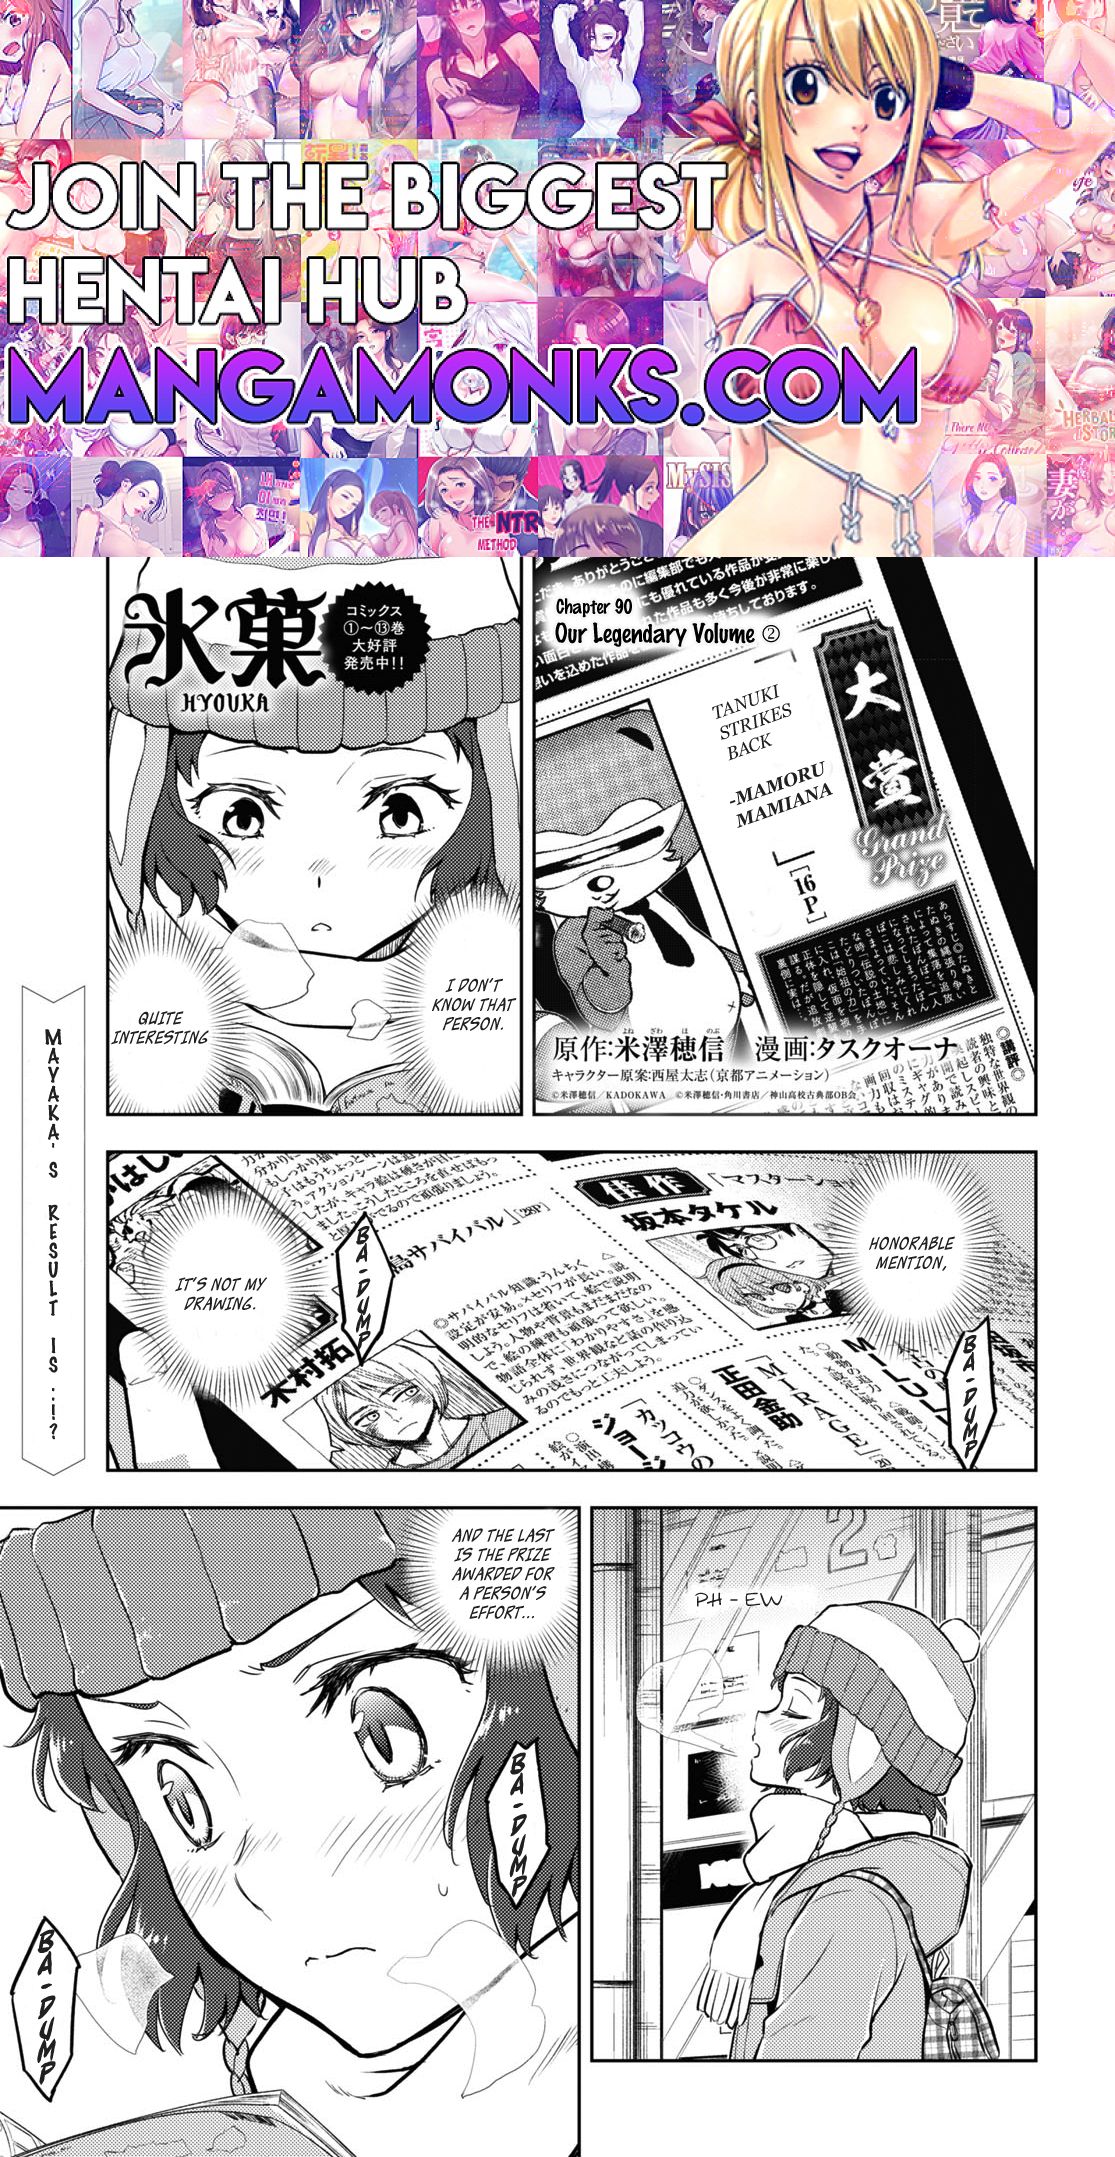 Hyouka chapter 90 page 1